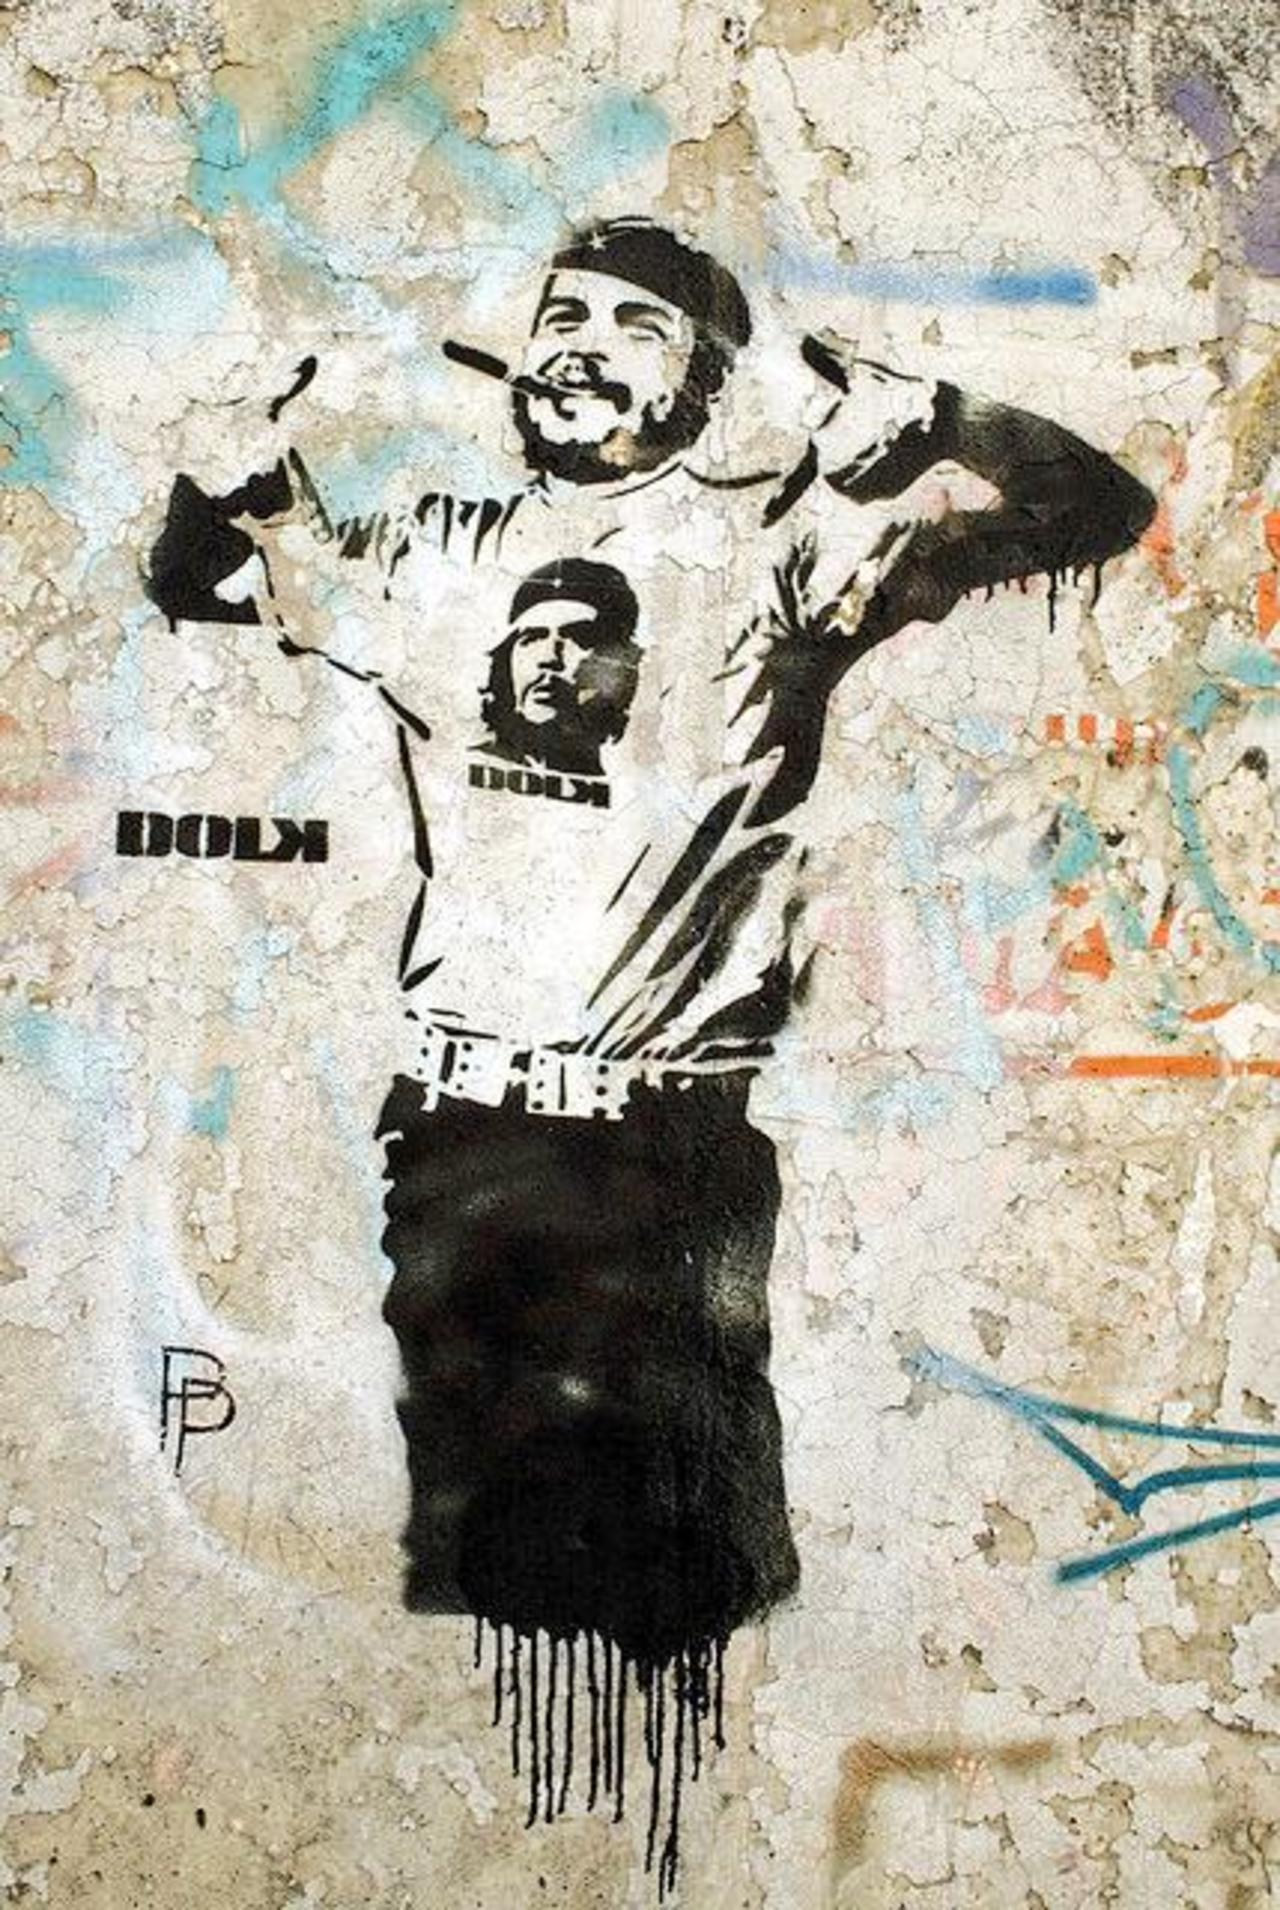 RT @Dame_Rouge: .@Pitchuskita - Le Che par #Dolk #Berlin #streetart #graffiti #urbanart http://t.co/vmNc51Yk7D